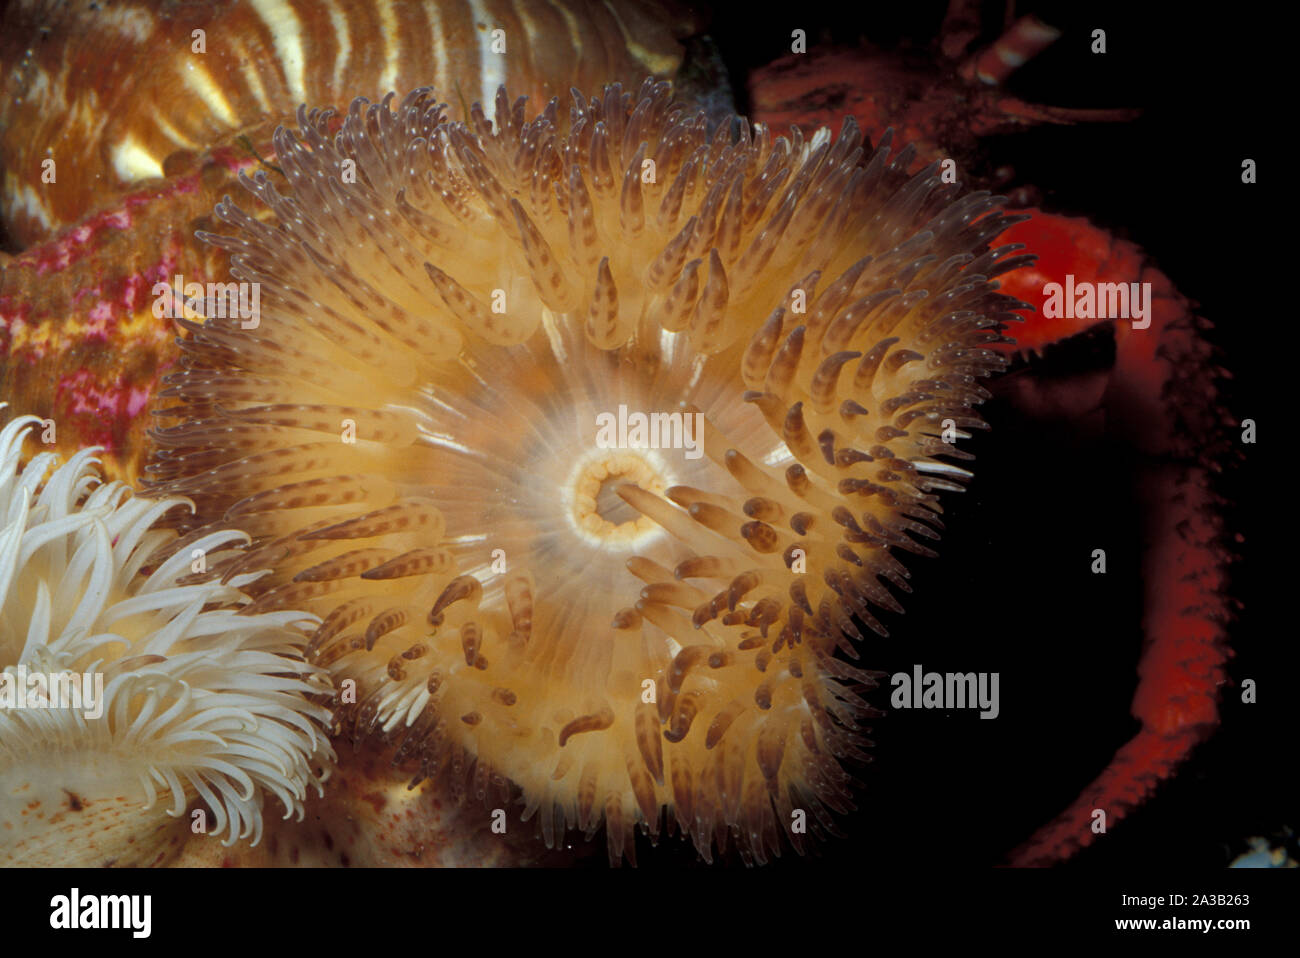 Parasitic anemone, Calliactis parasitica, Hormathiidae, Mediterranean Sea, Italy Stock Photo